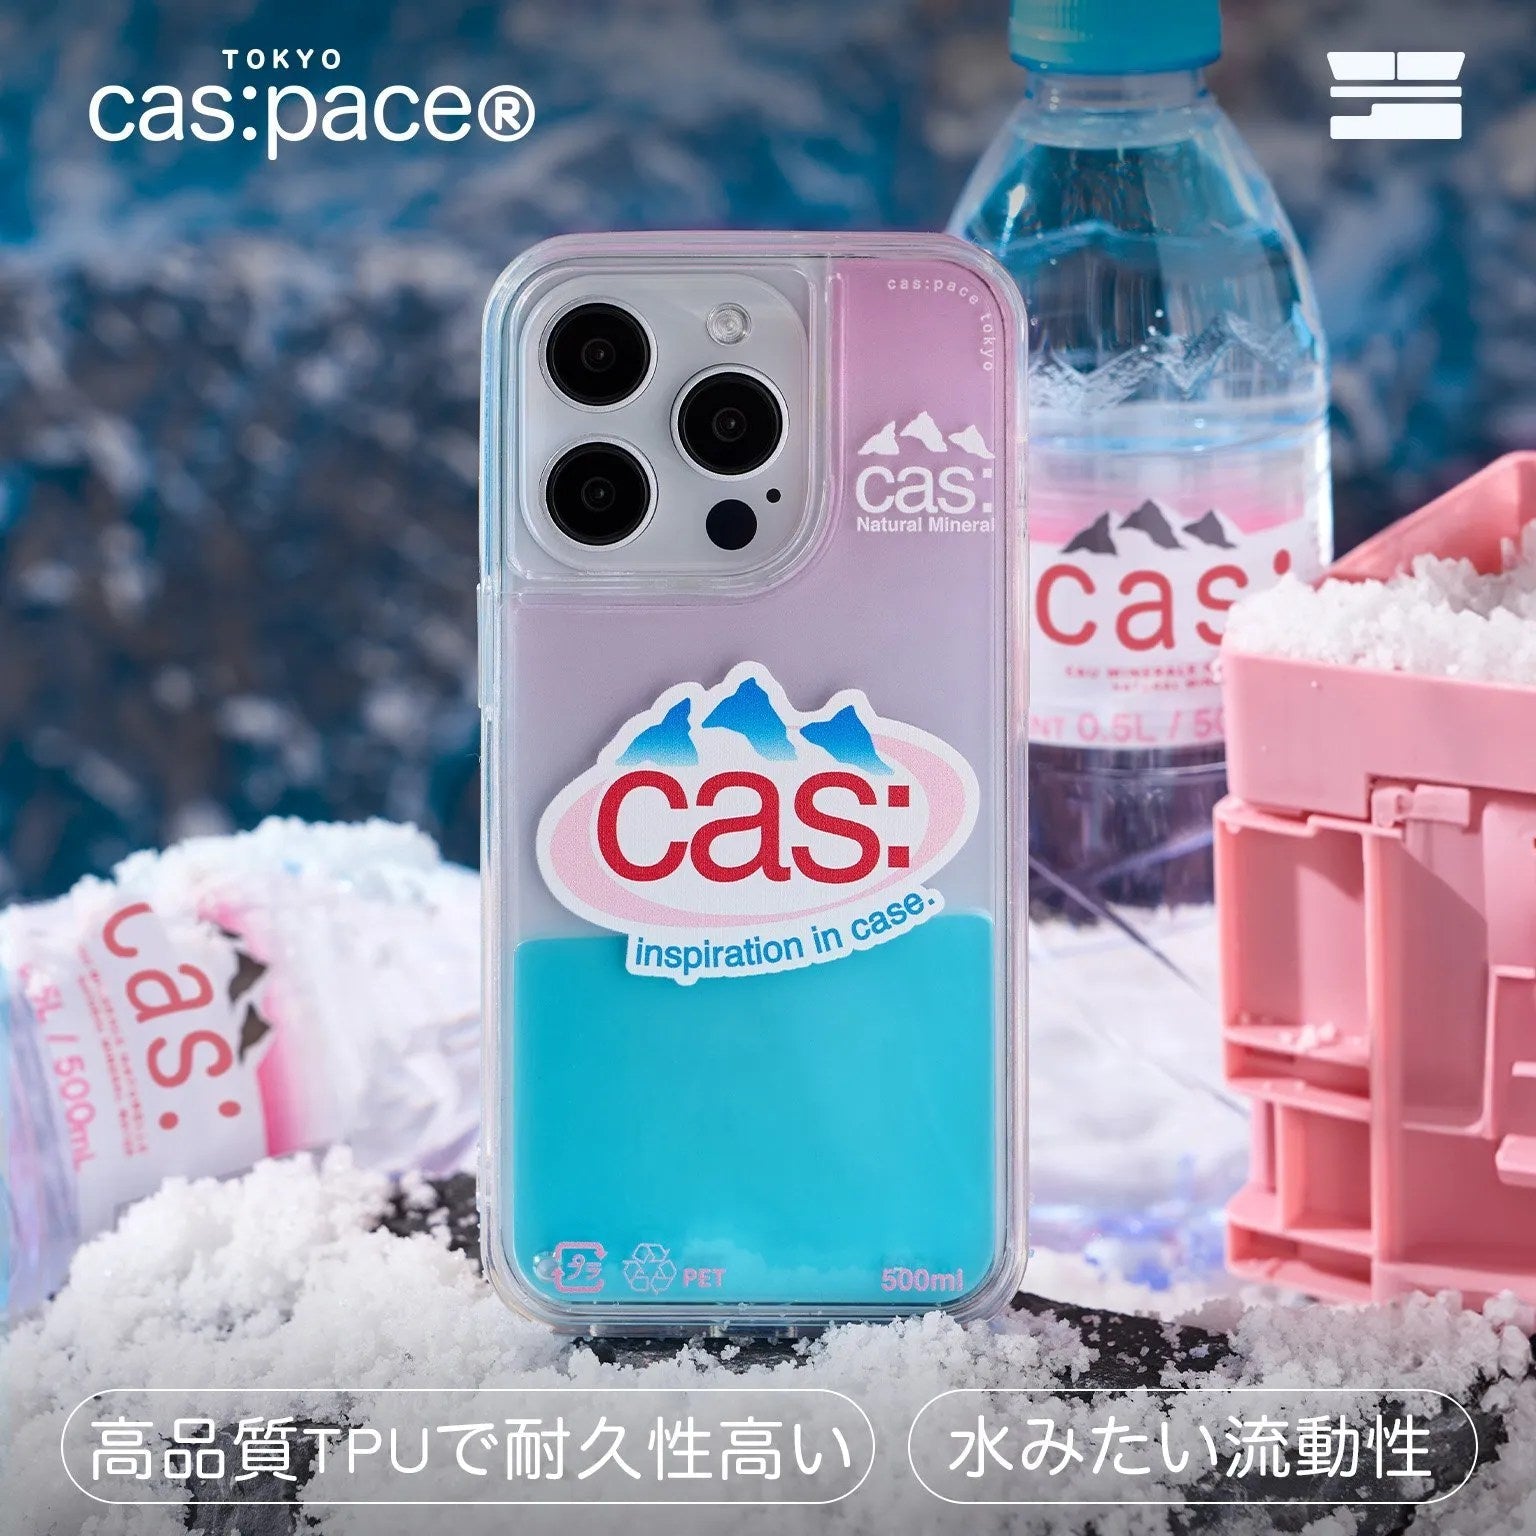 cas:pace 24S/S「cas:天然水」流砂携帯ケース - cas:pace 殼空間